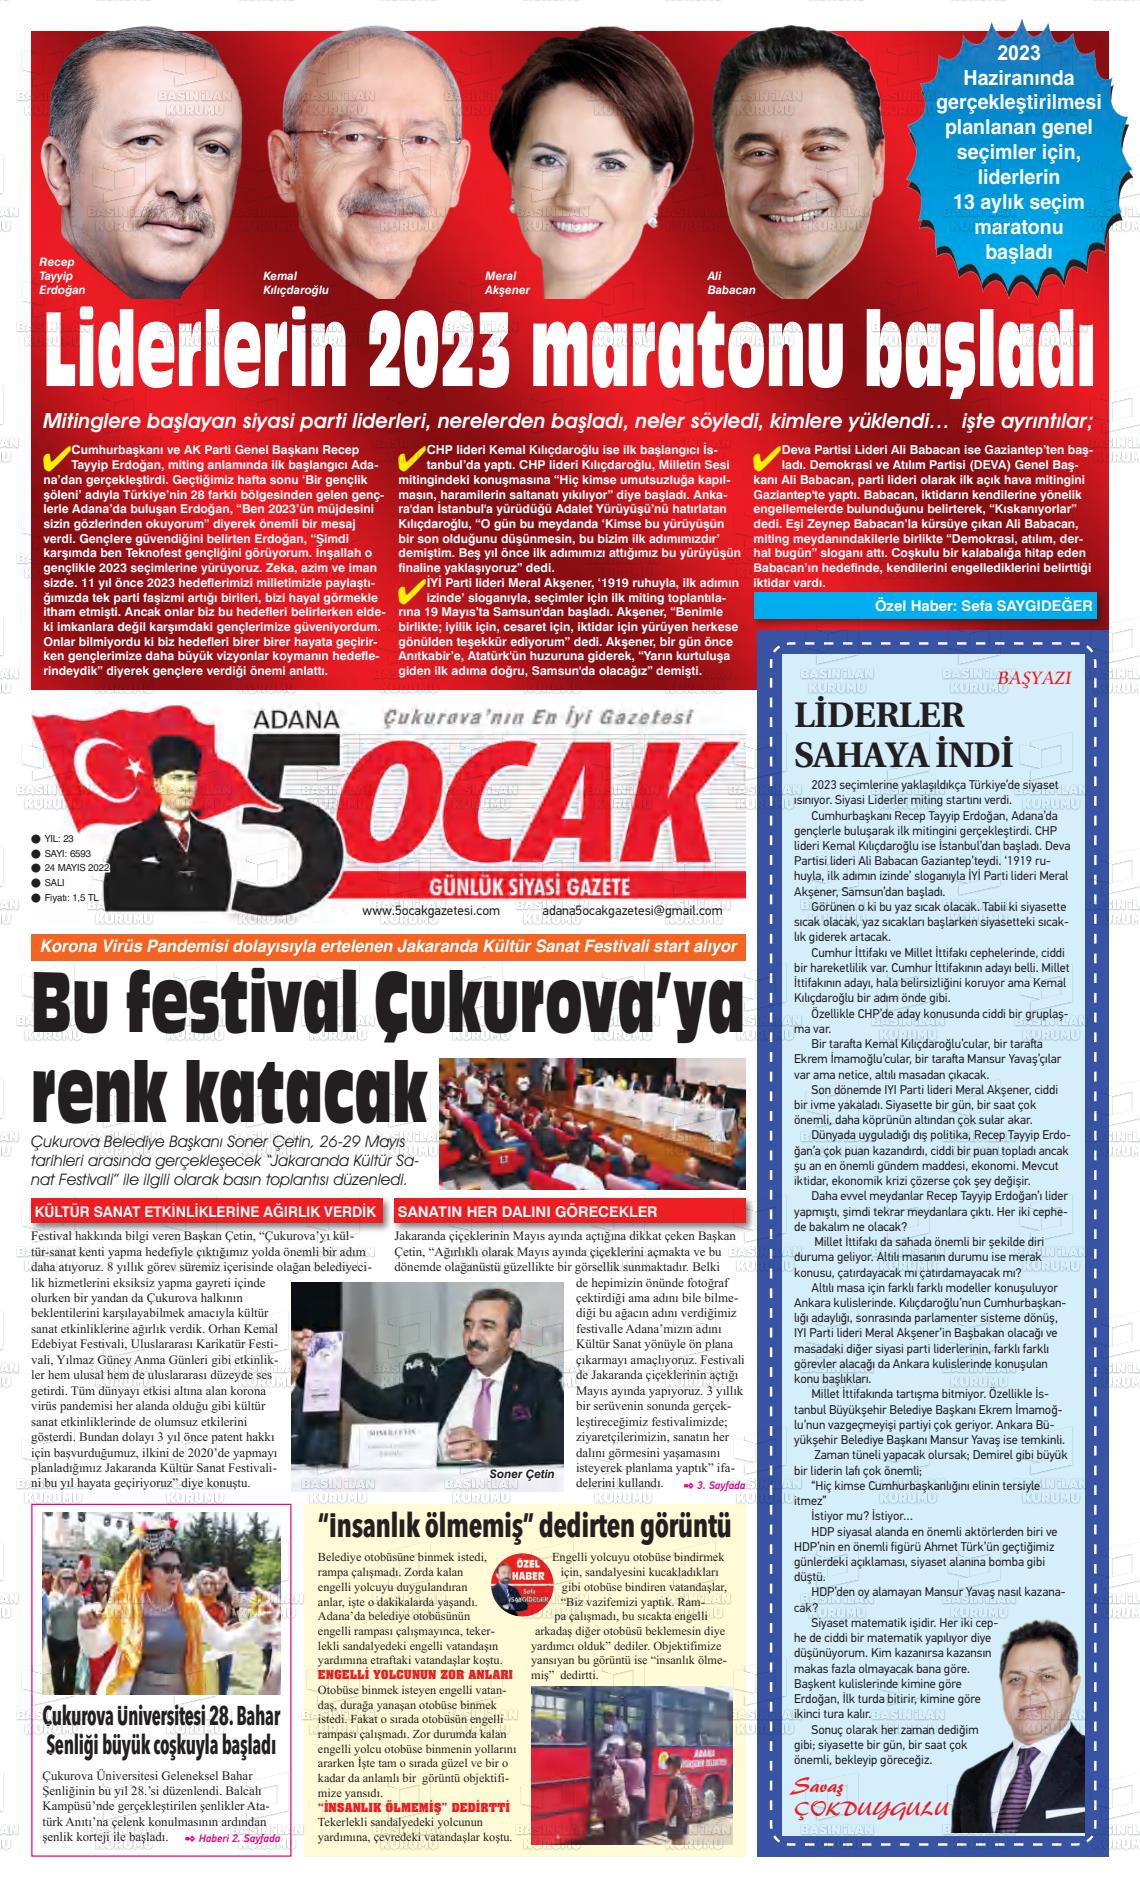 24 Mayıs 2022 Adana 5 Ocak Gazete Manşeti